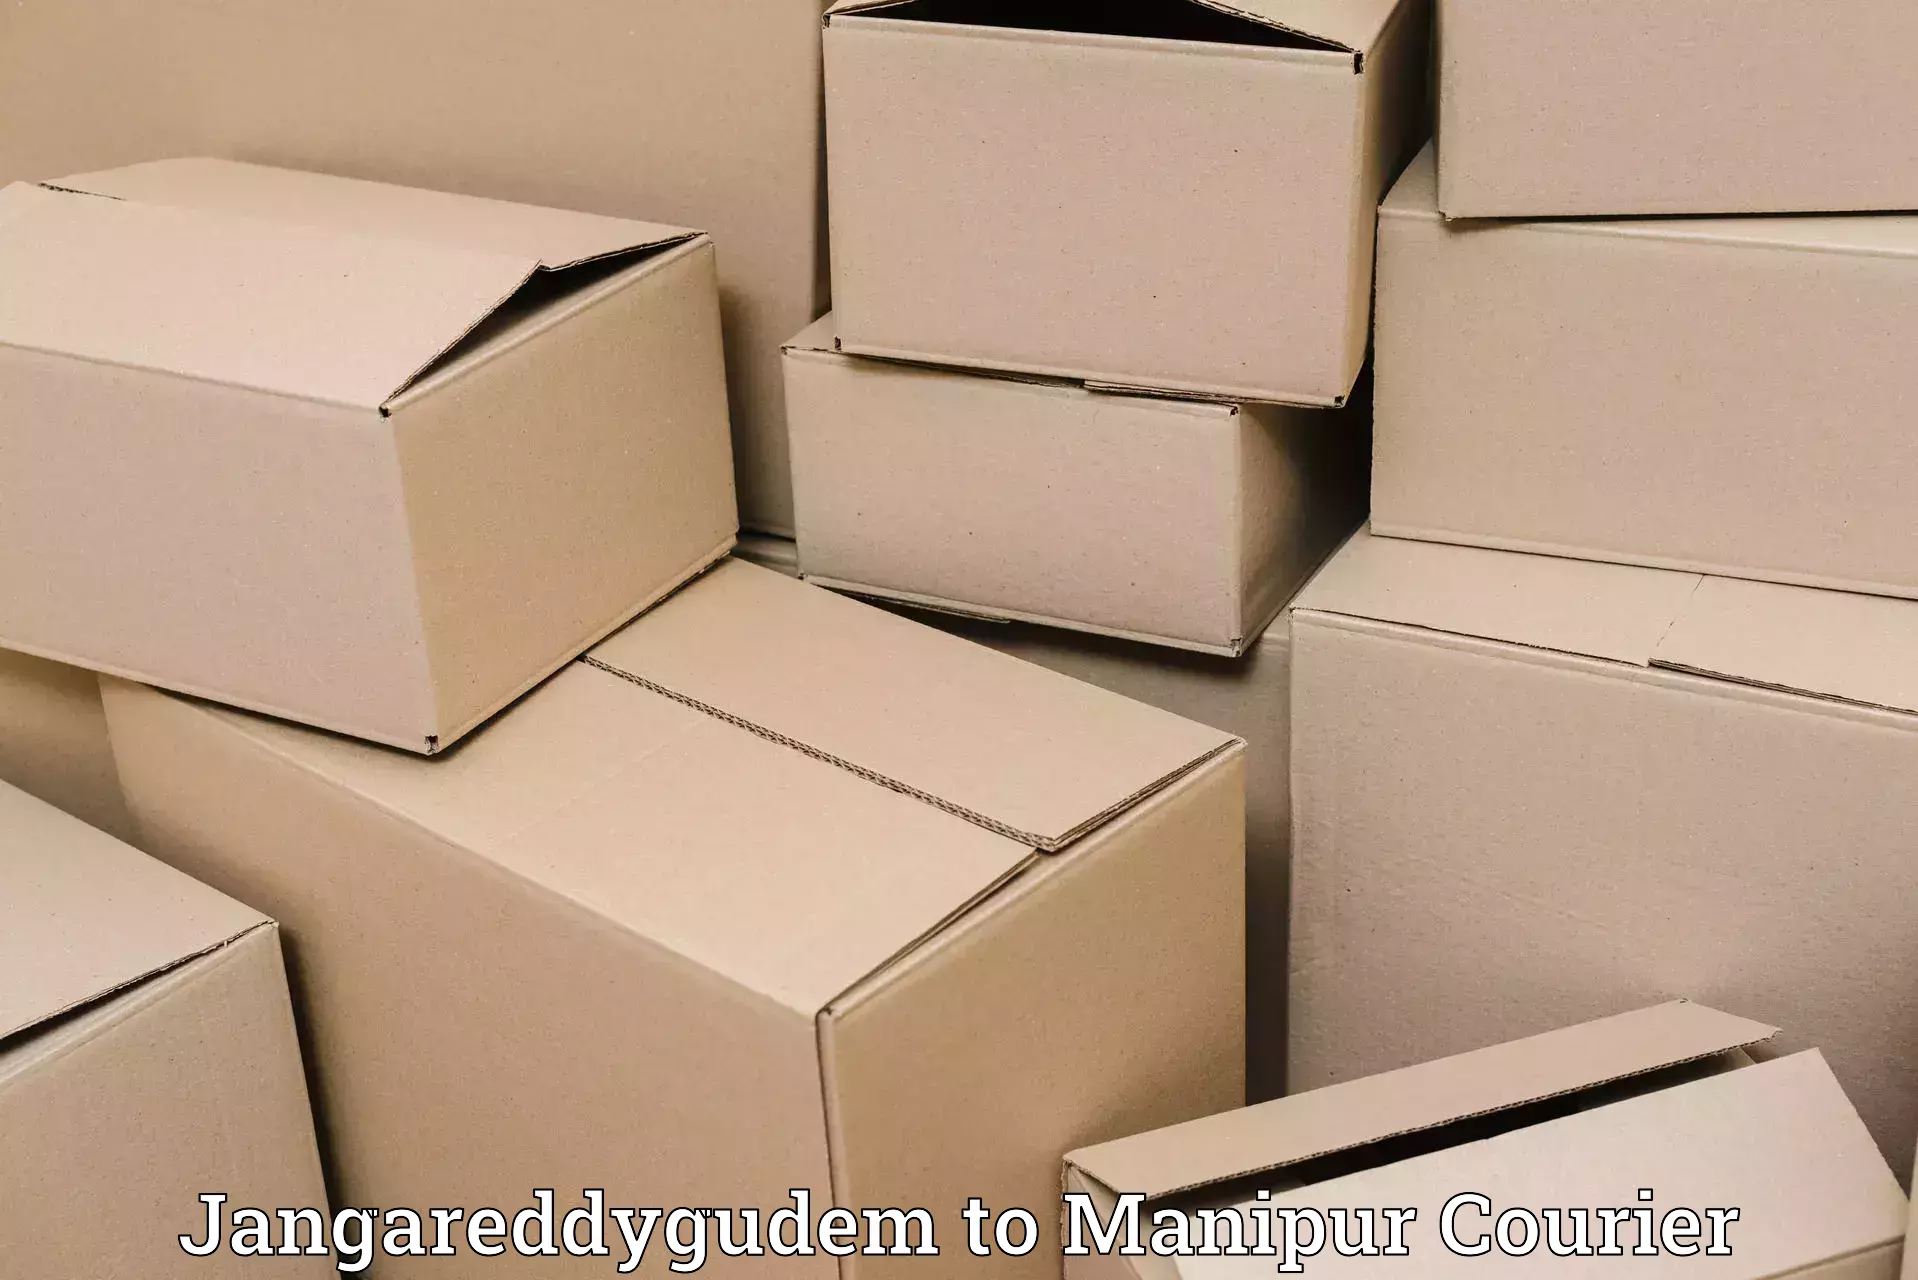 High-priority parcel service Jangareddygudem to Manipur